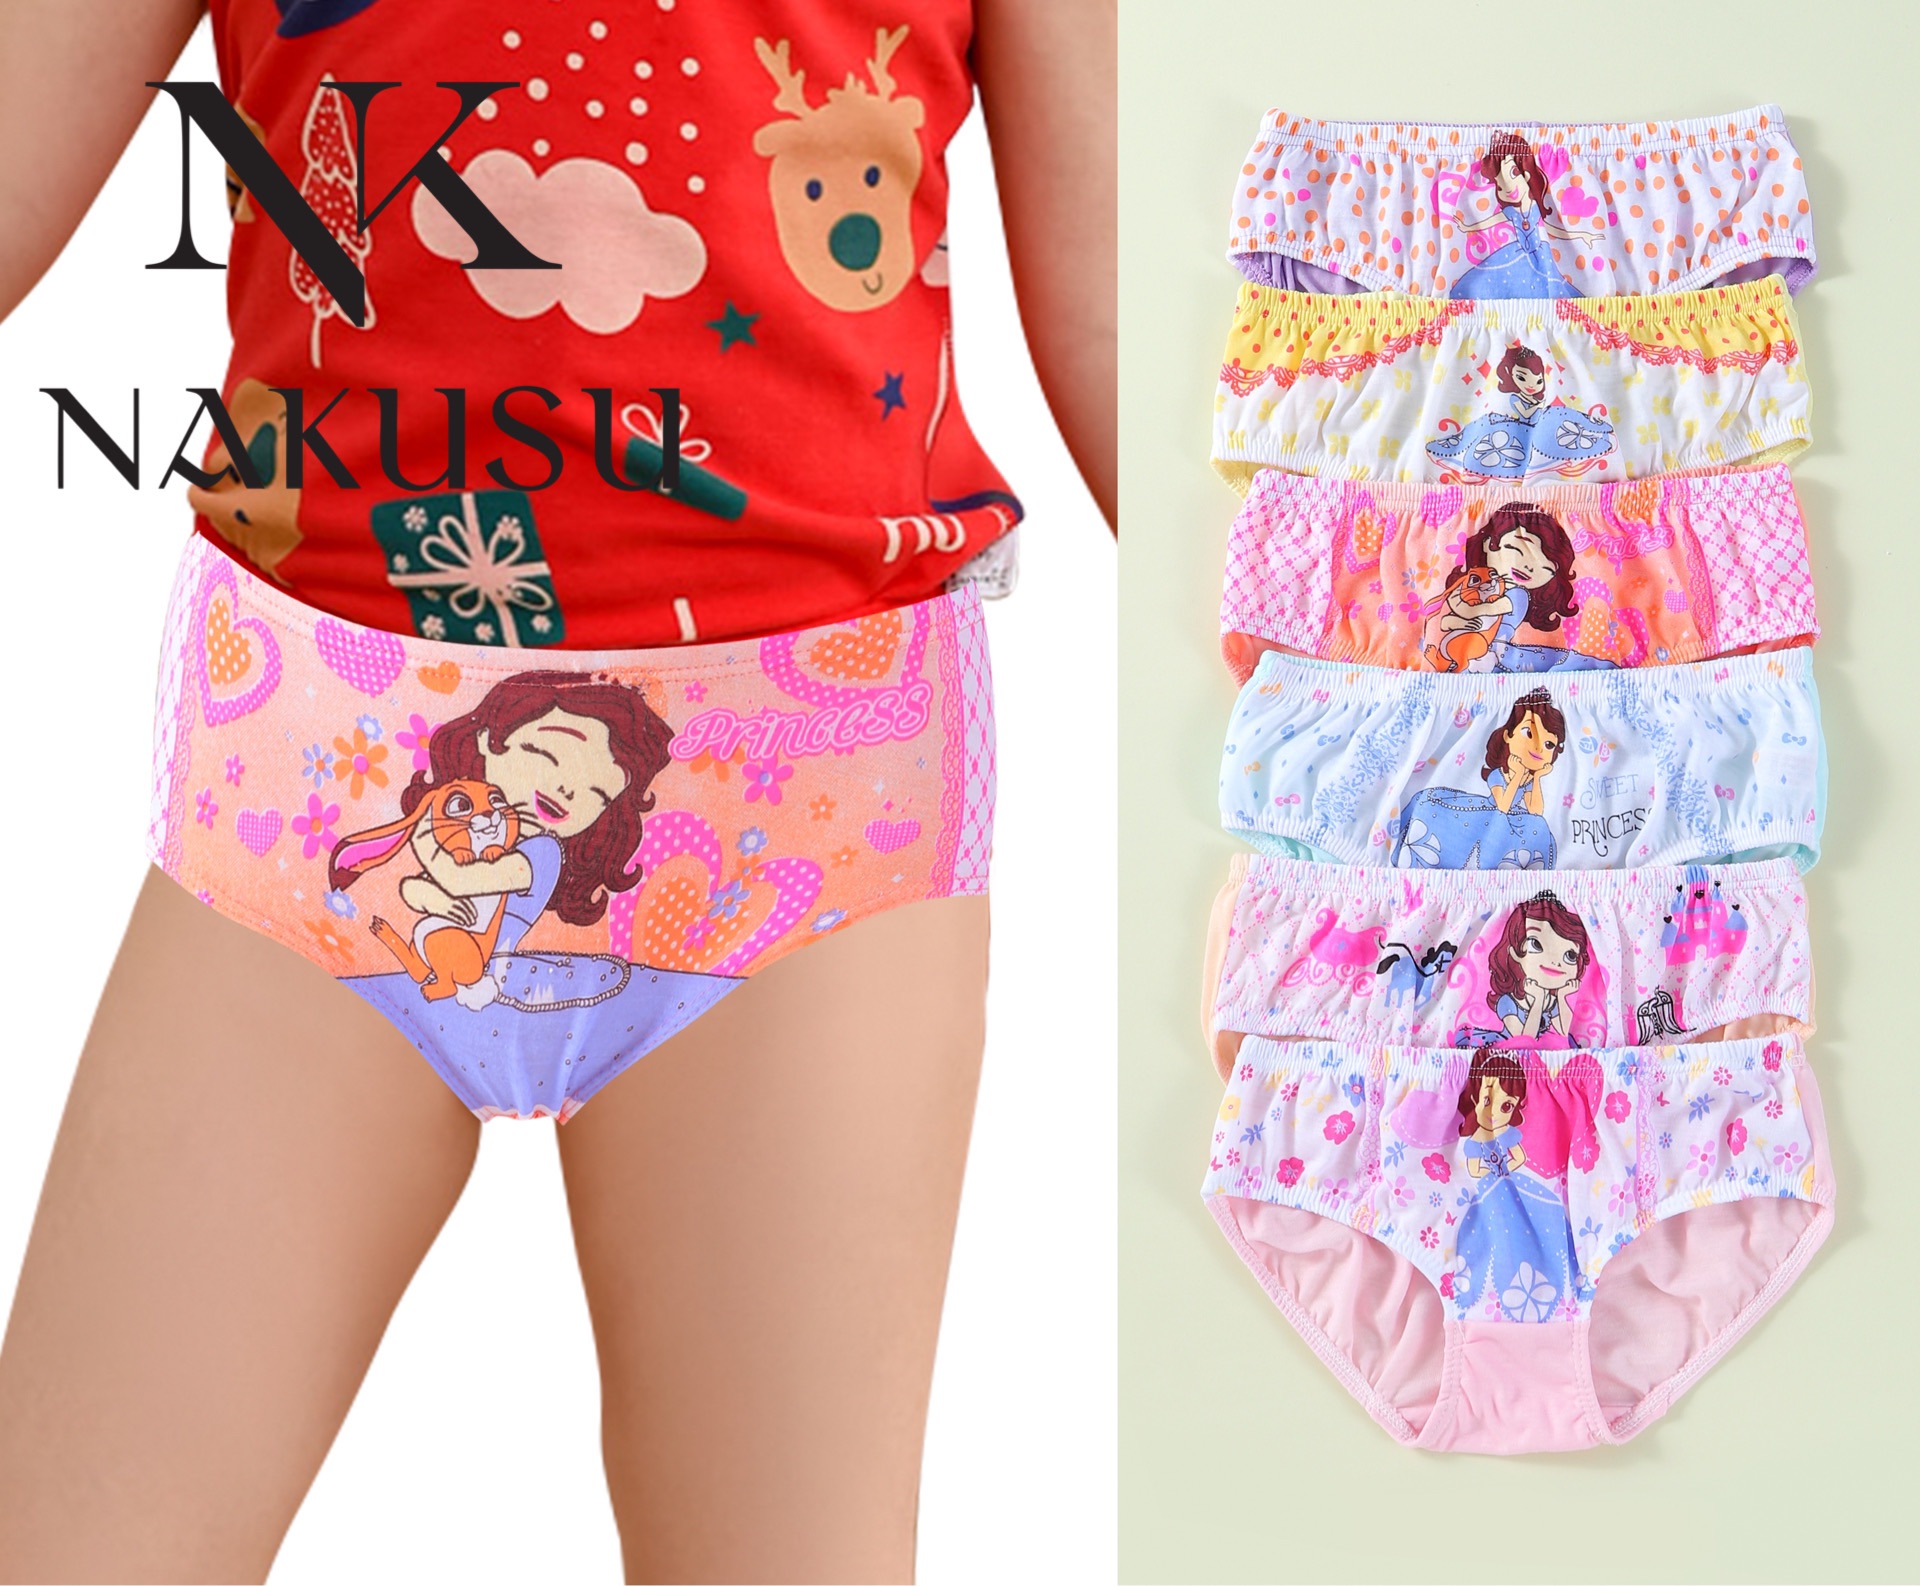 WOMEN'S Character Cartoon Underwear Picture Briefs / Knickers